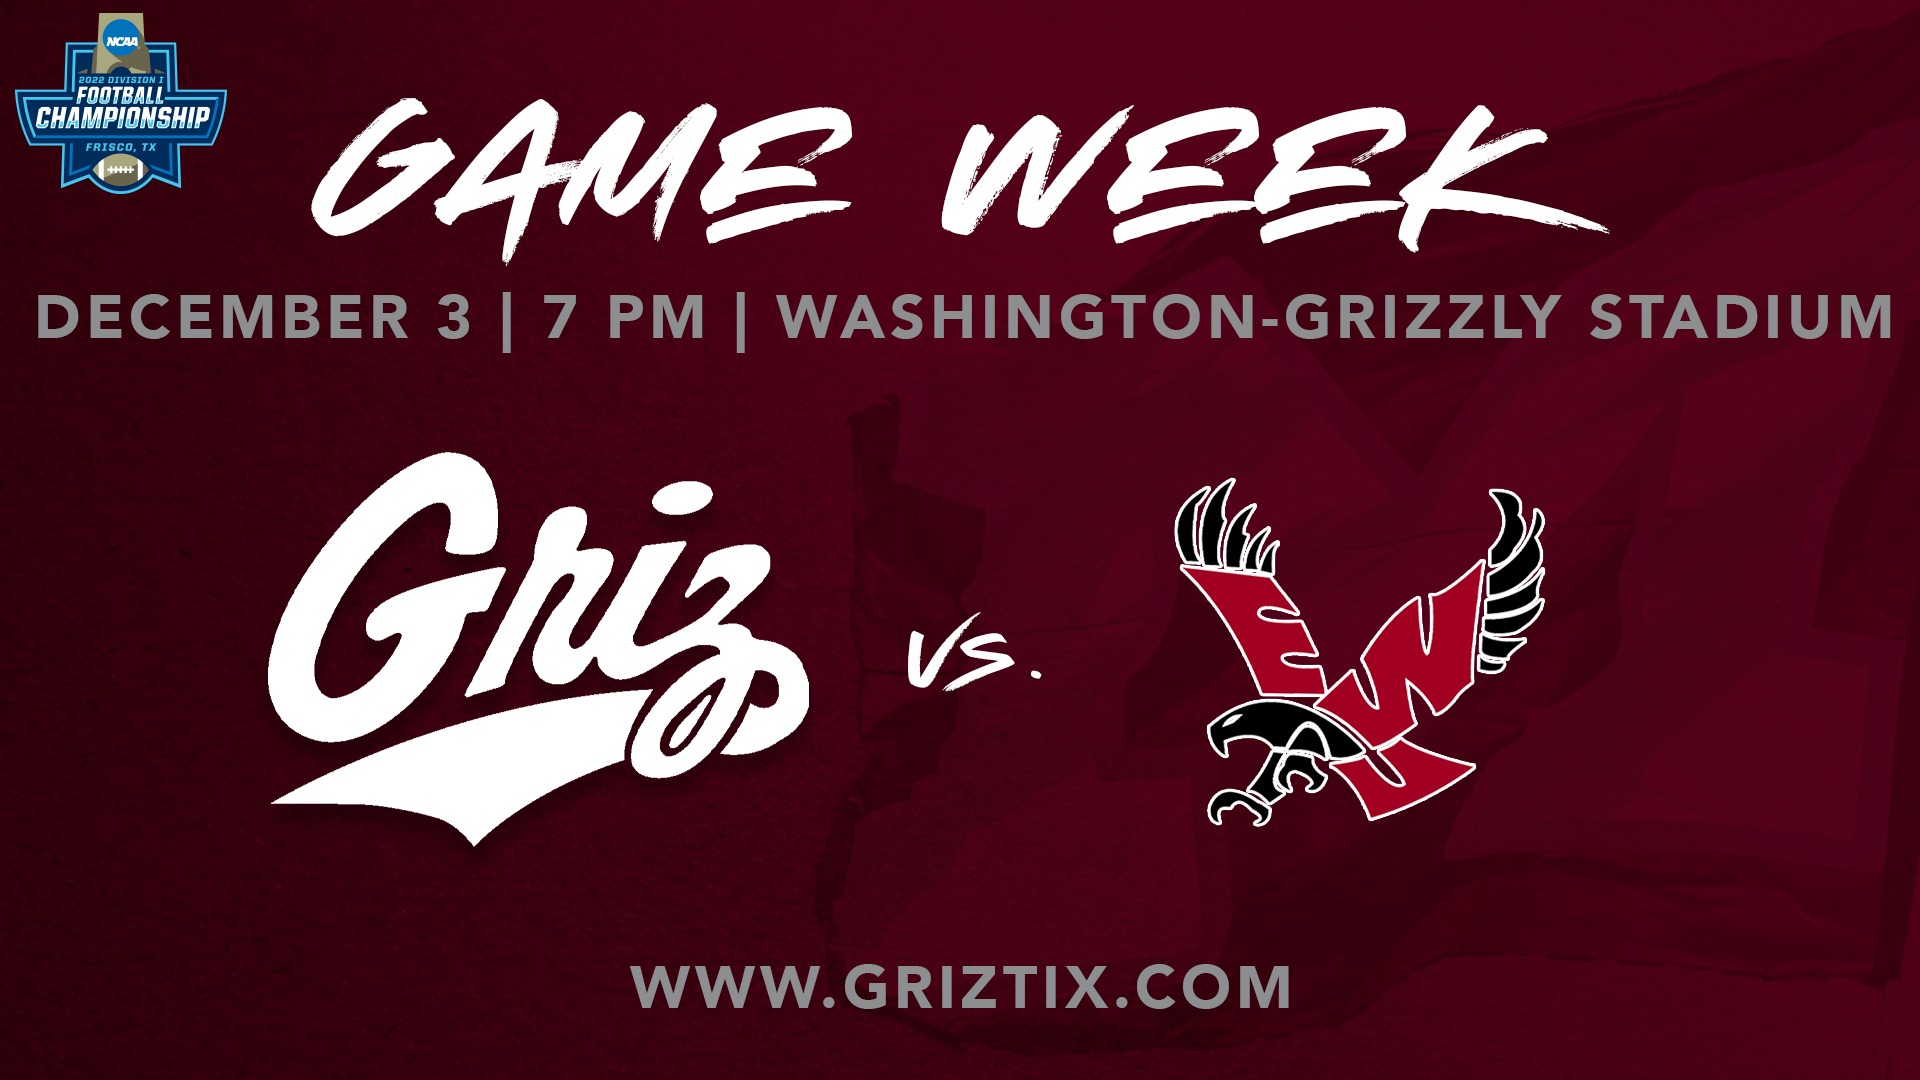 UM Griz Playoff Game vs. Eastern Washington Eagles 7pm Friday December 3rd at Washington Grizzly Stadium in Missoula